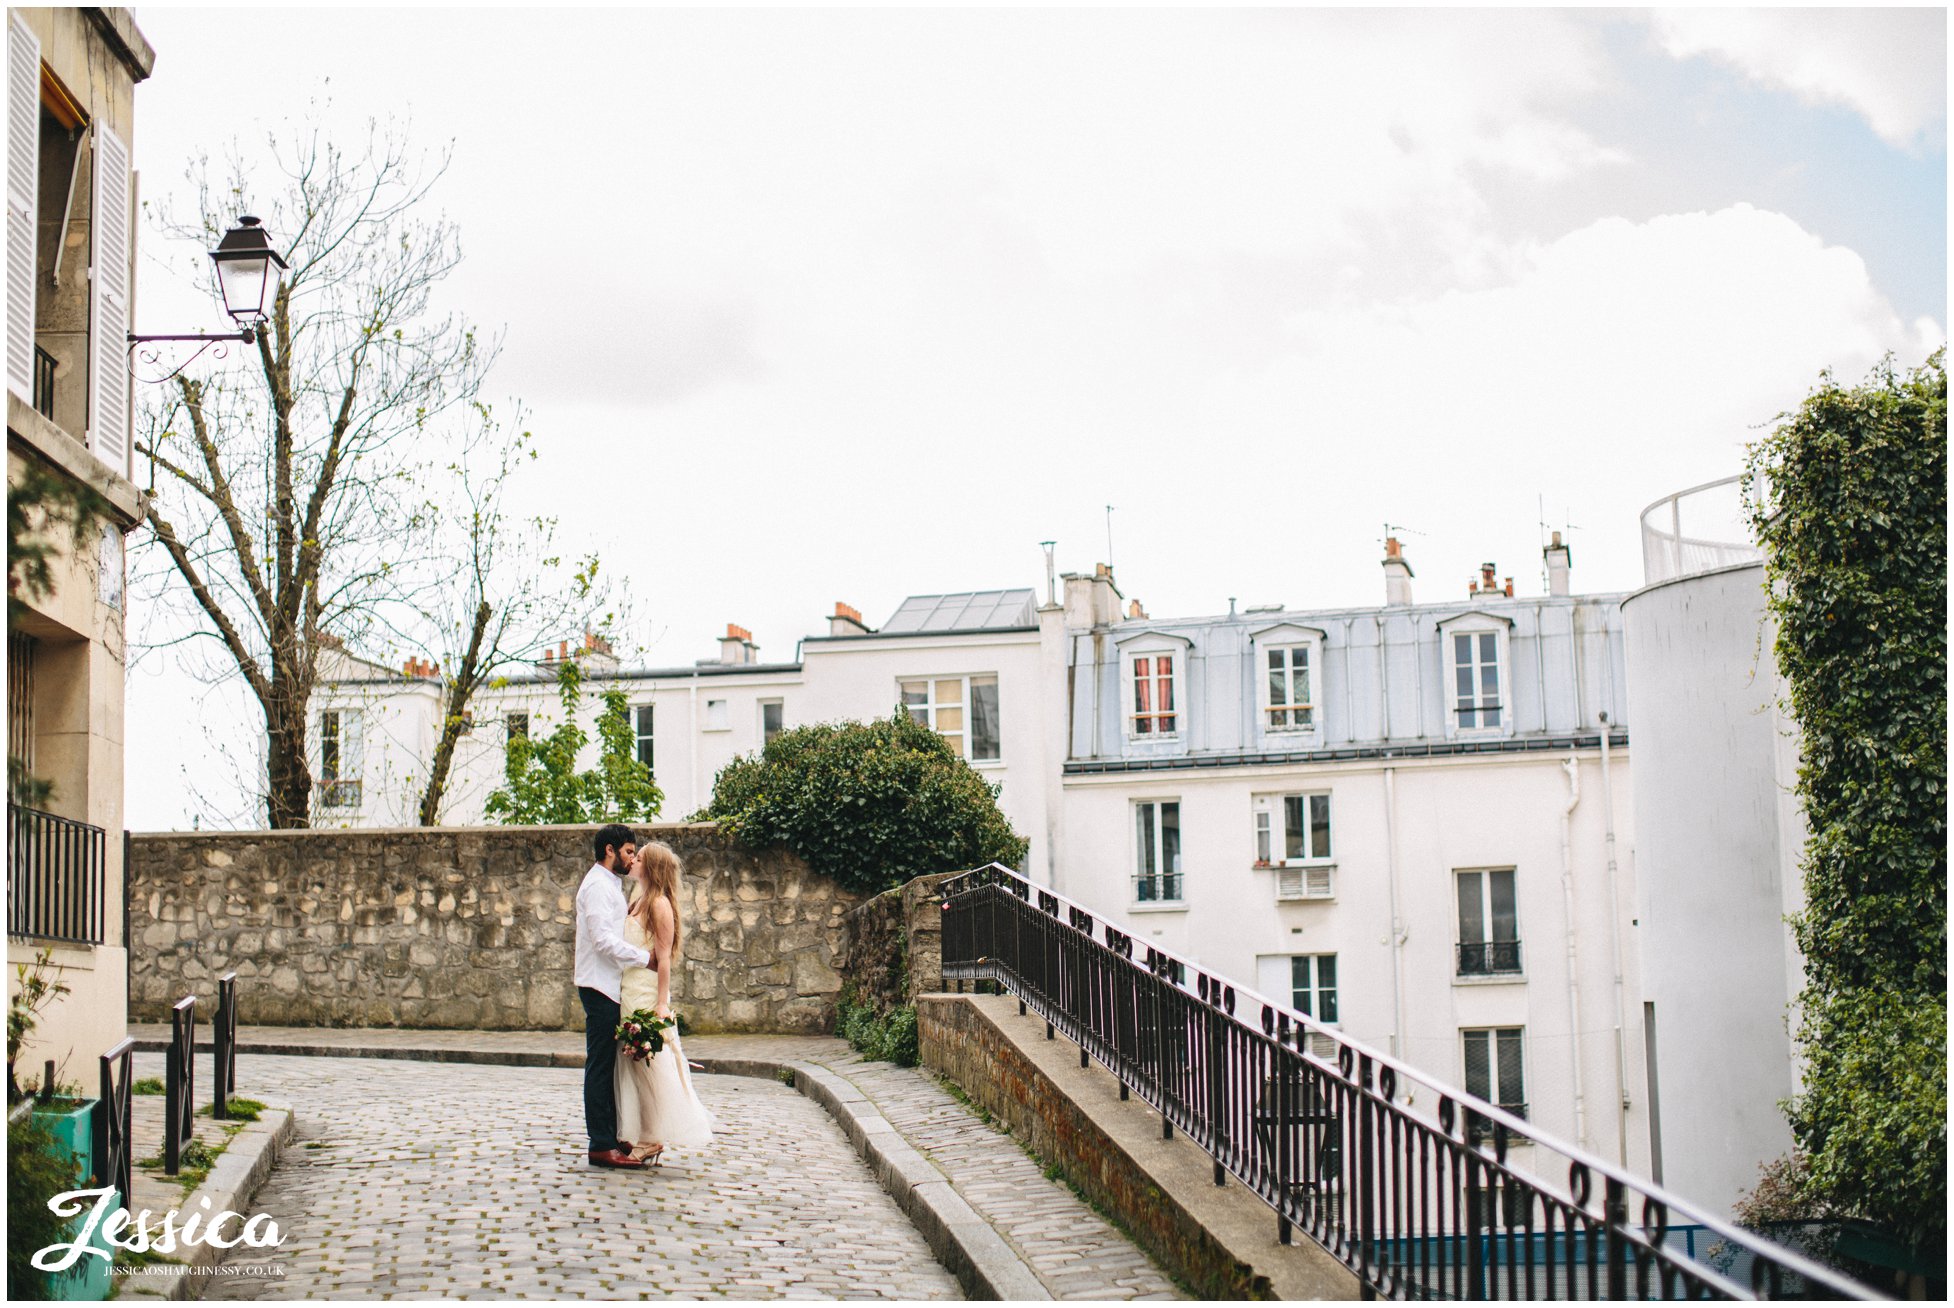 newly weds kiss on parisian street - france wedding photographer